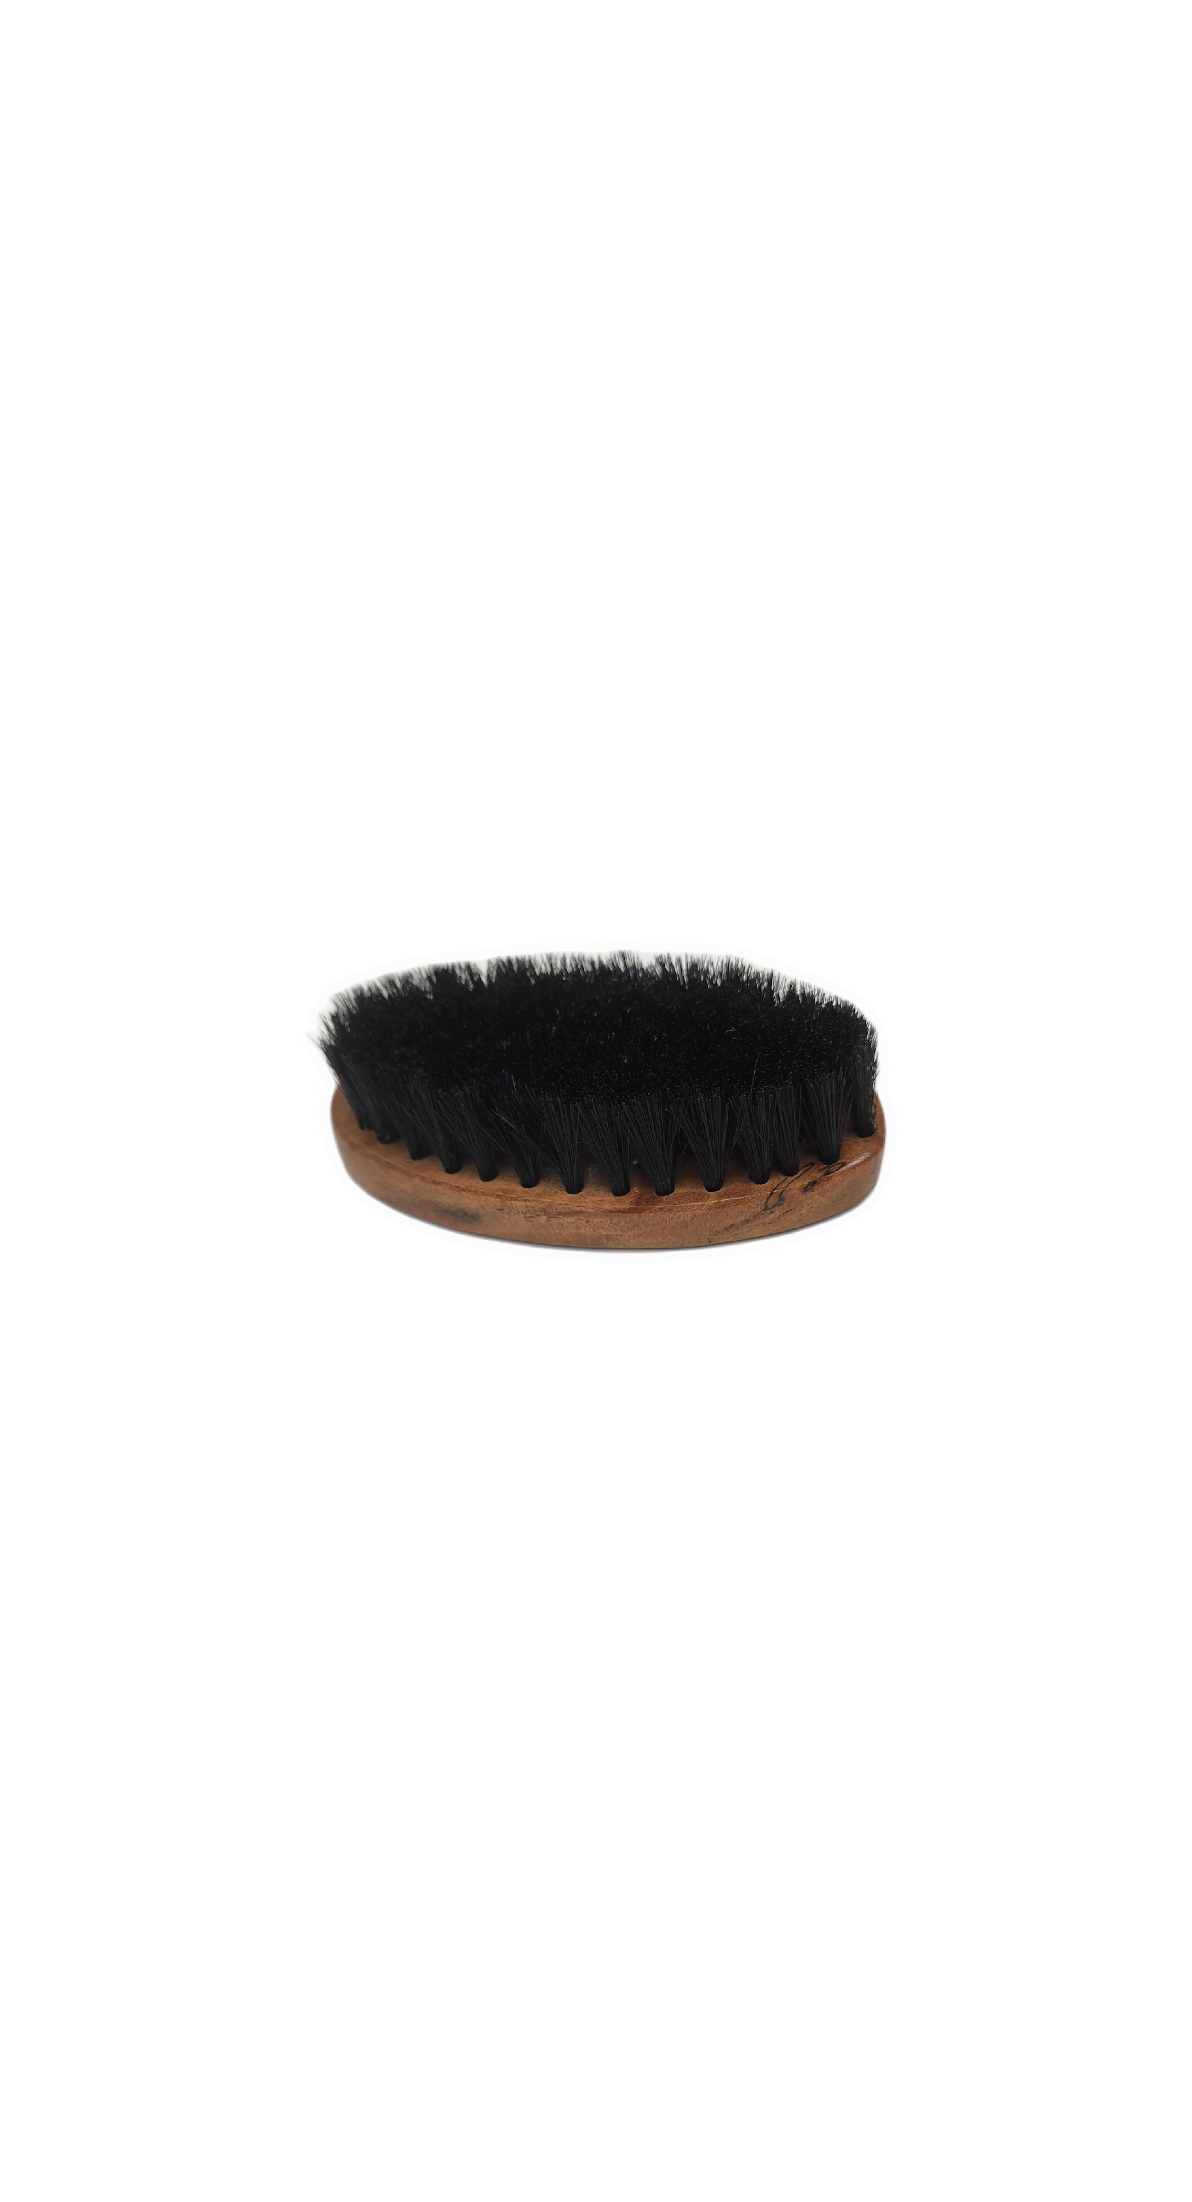 Boar Bristle Brush & Wood Comb box set